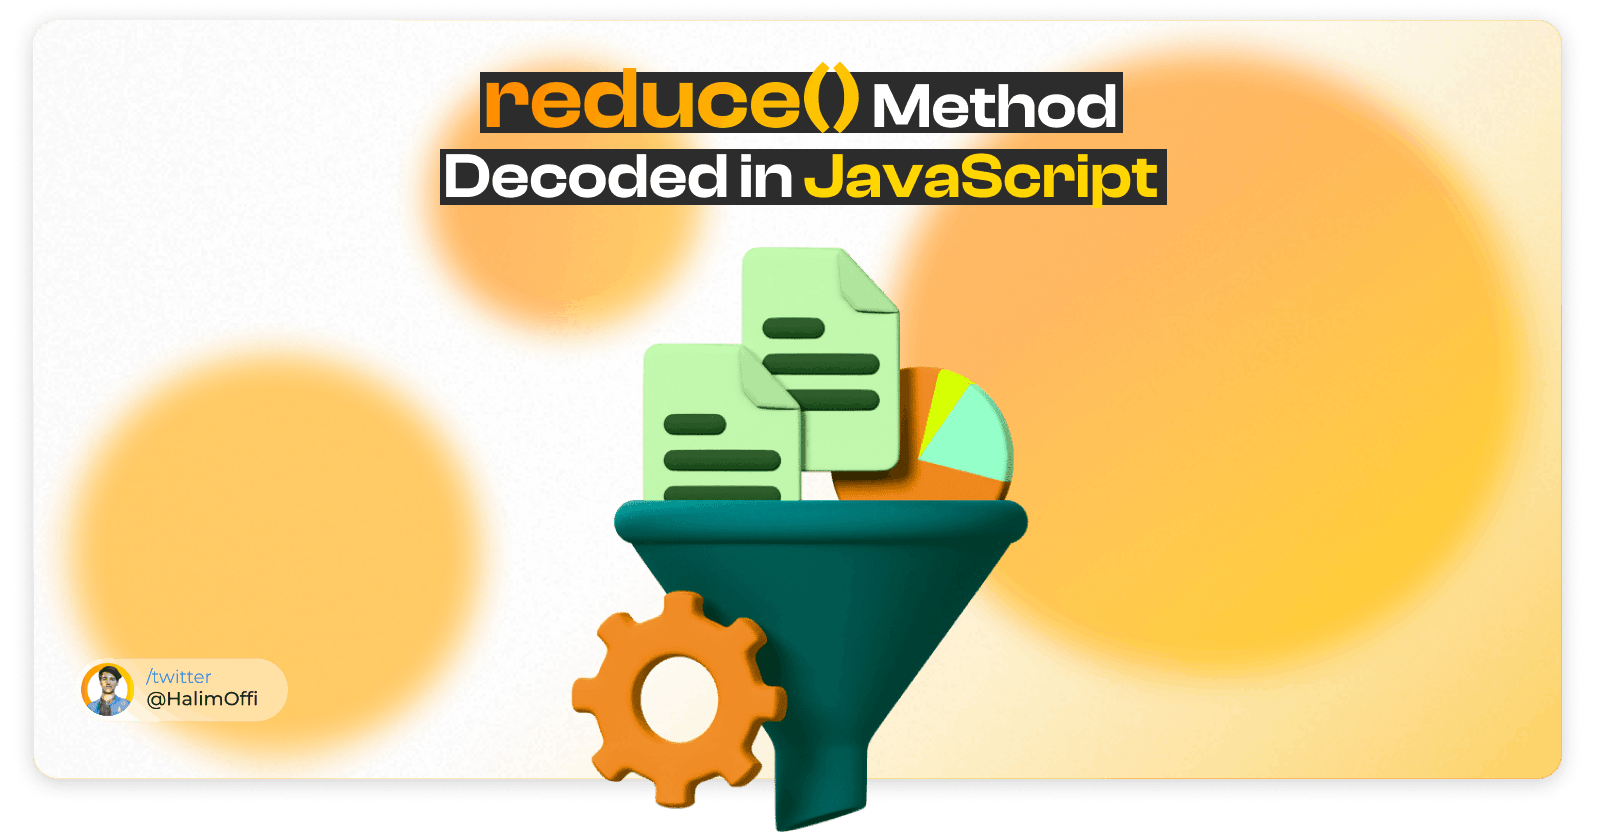 The `reduce()` Method in JavaScript